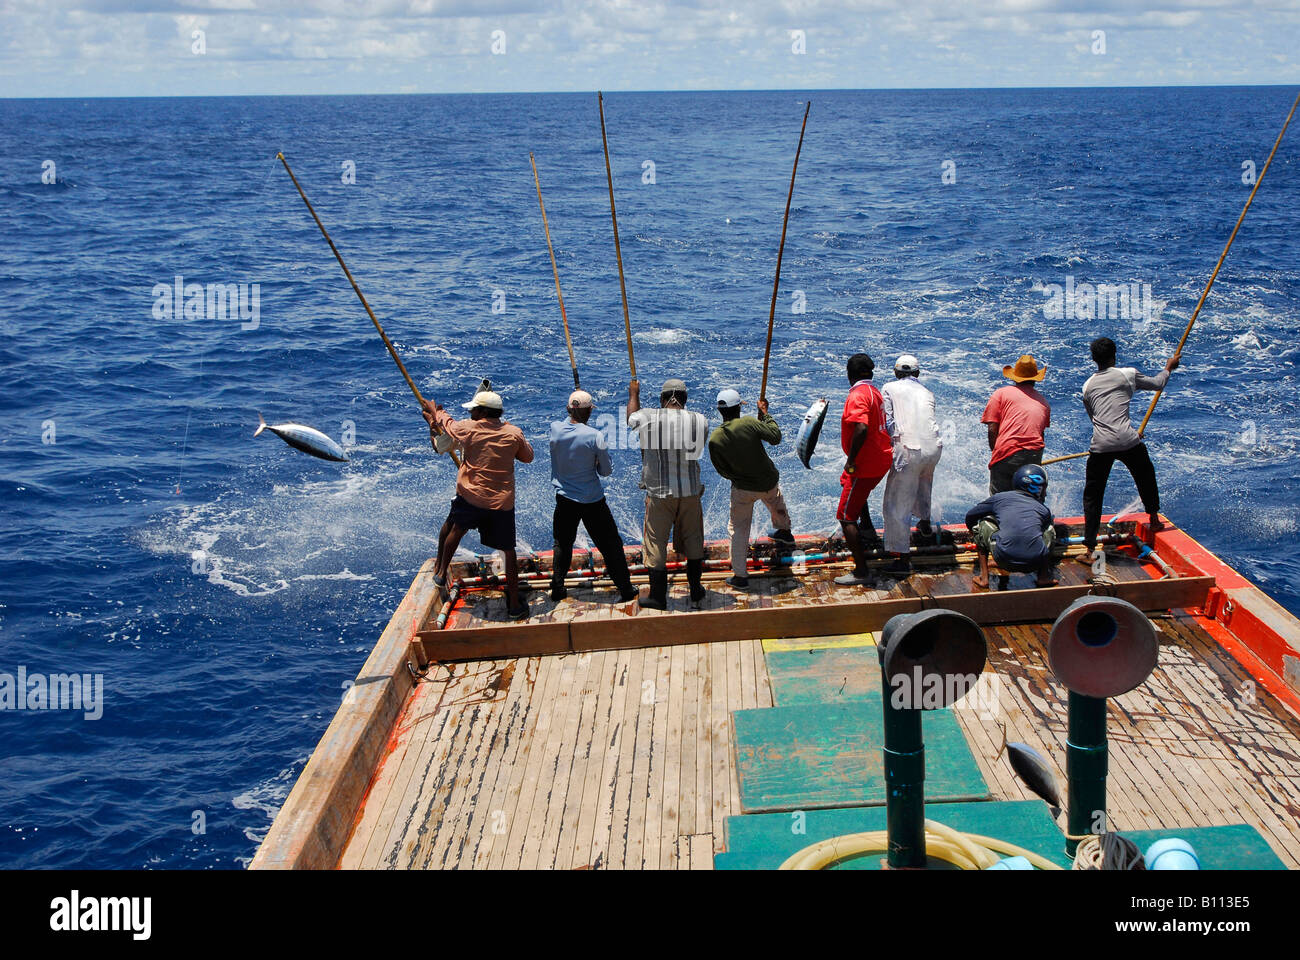 https://c8.alamy.com/comp/B113E5/tuna-fishermen-with-traditional-fishing-rod-indian-ocean-maldives-B113E5.jpg